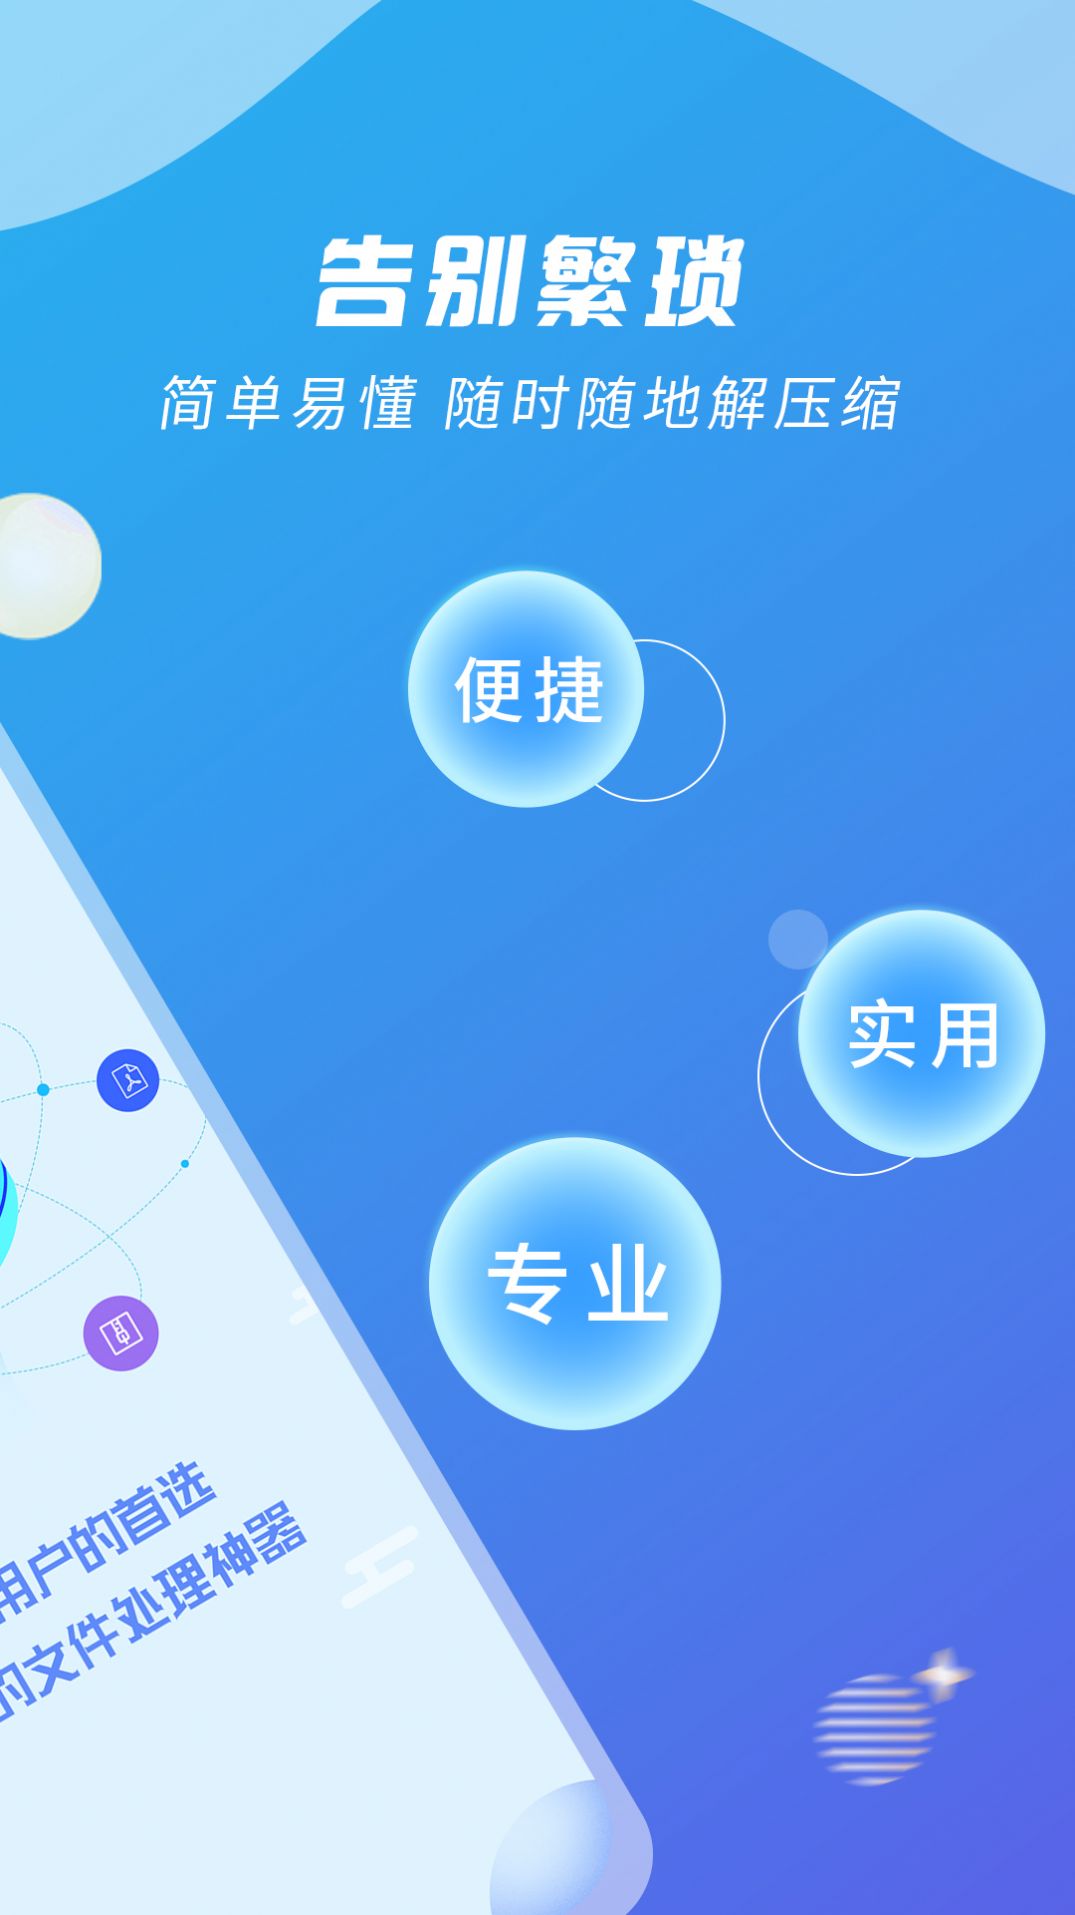 ZIP解压缩王app的特点图片